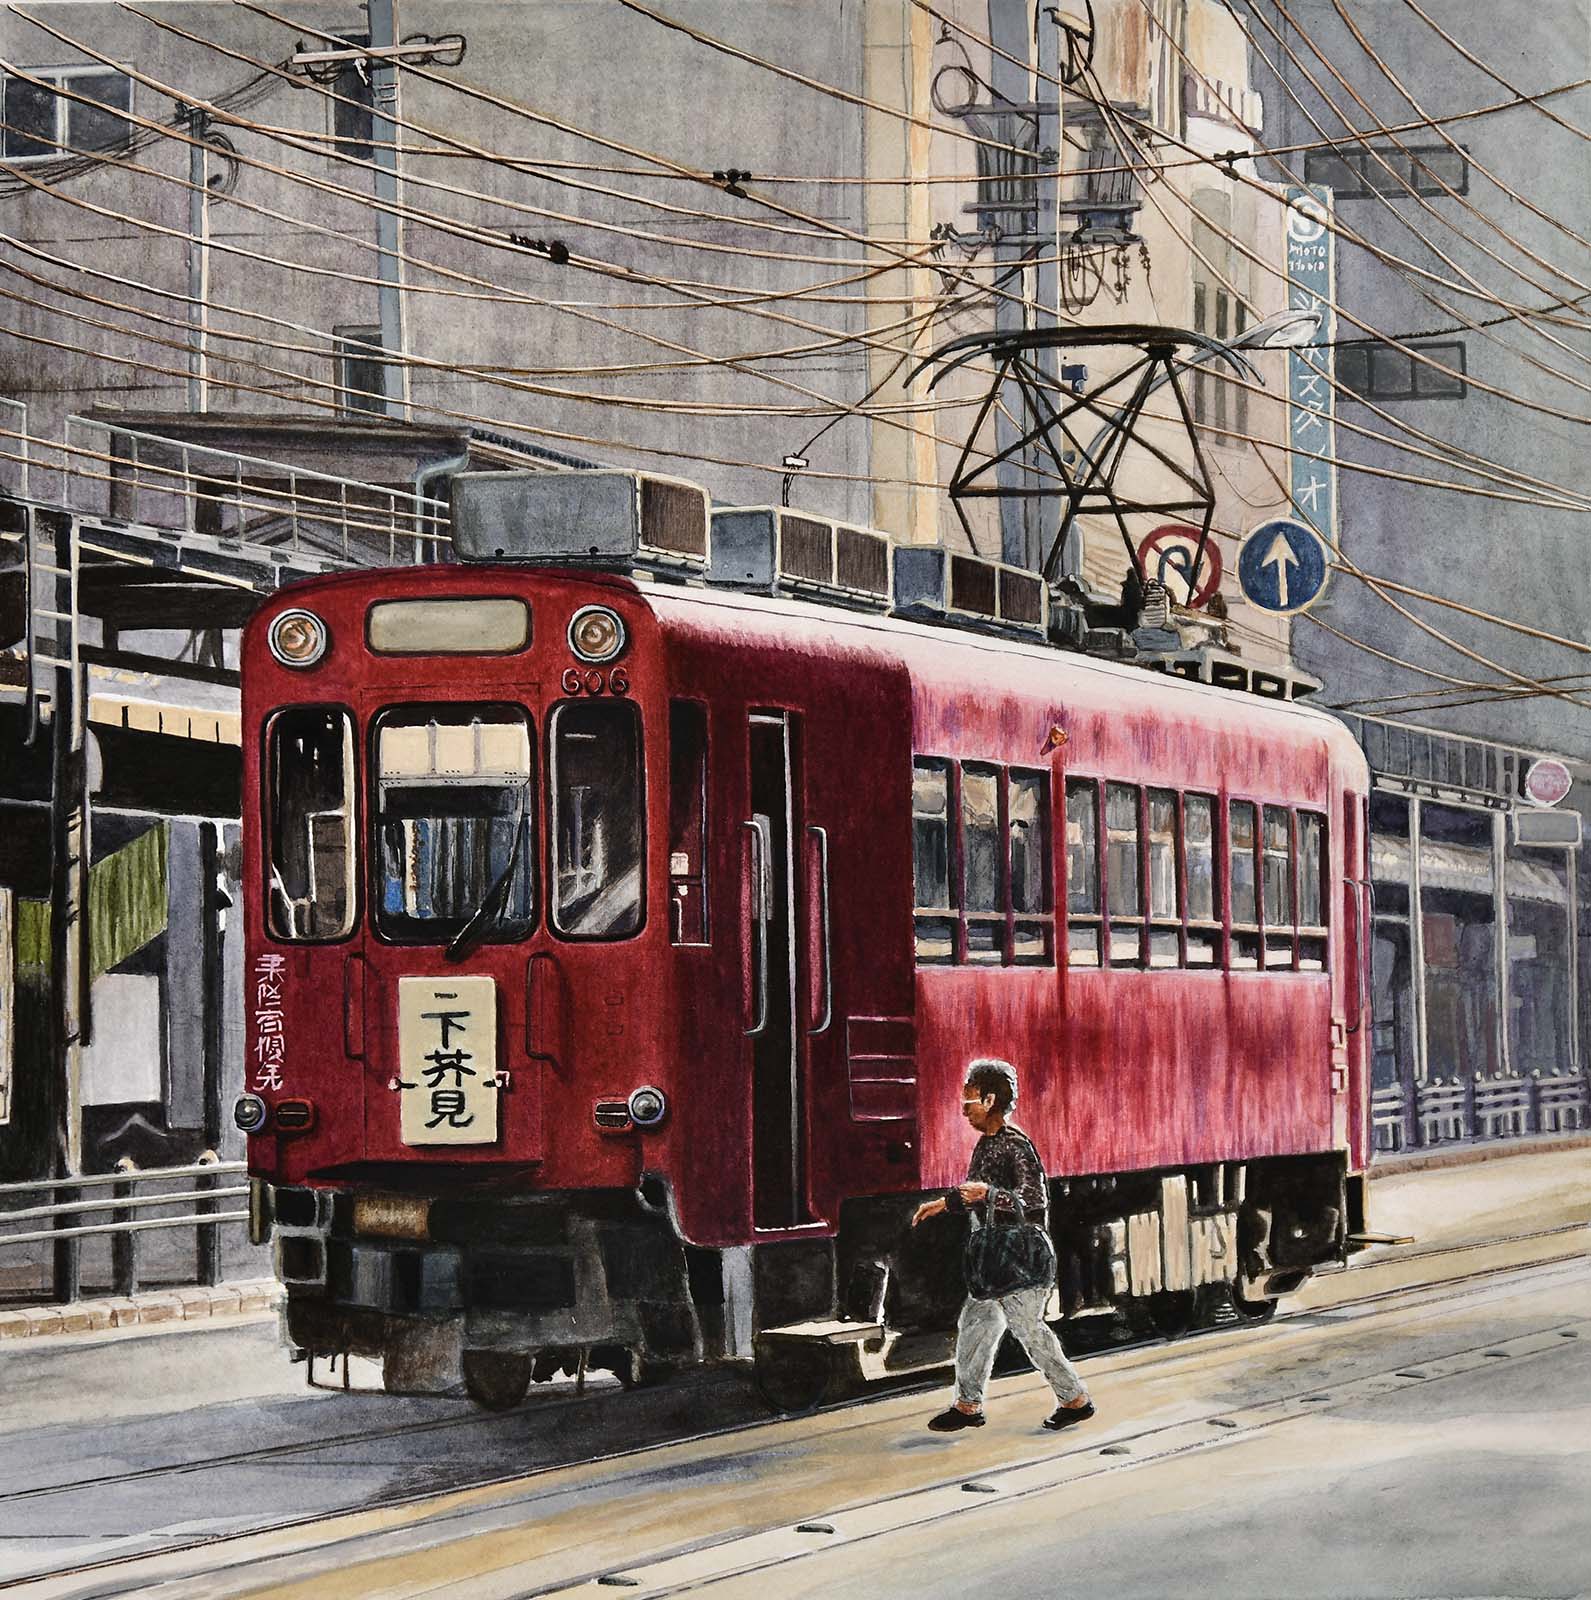 Mo 606 tram  (Minomachi Line), watercolor painting